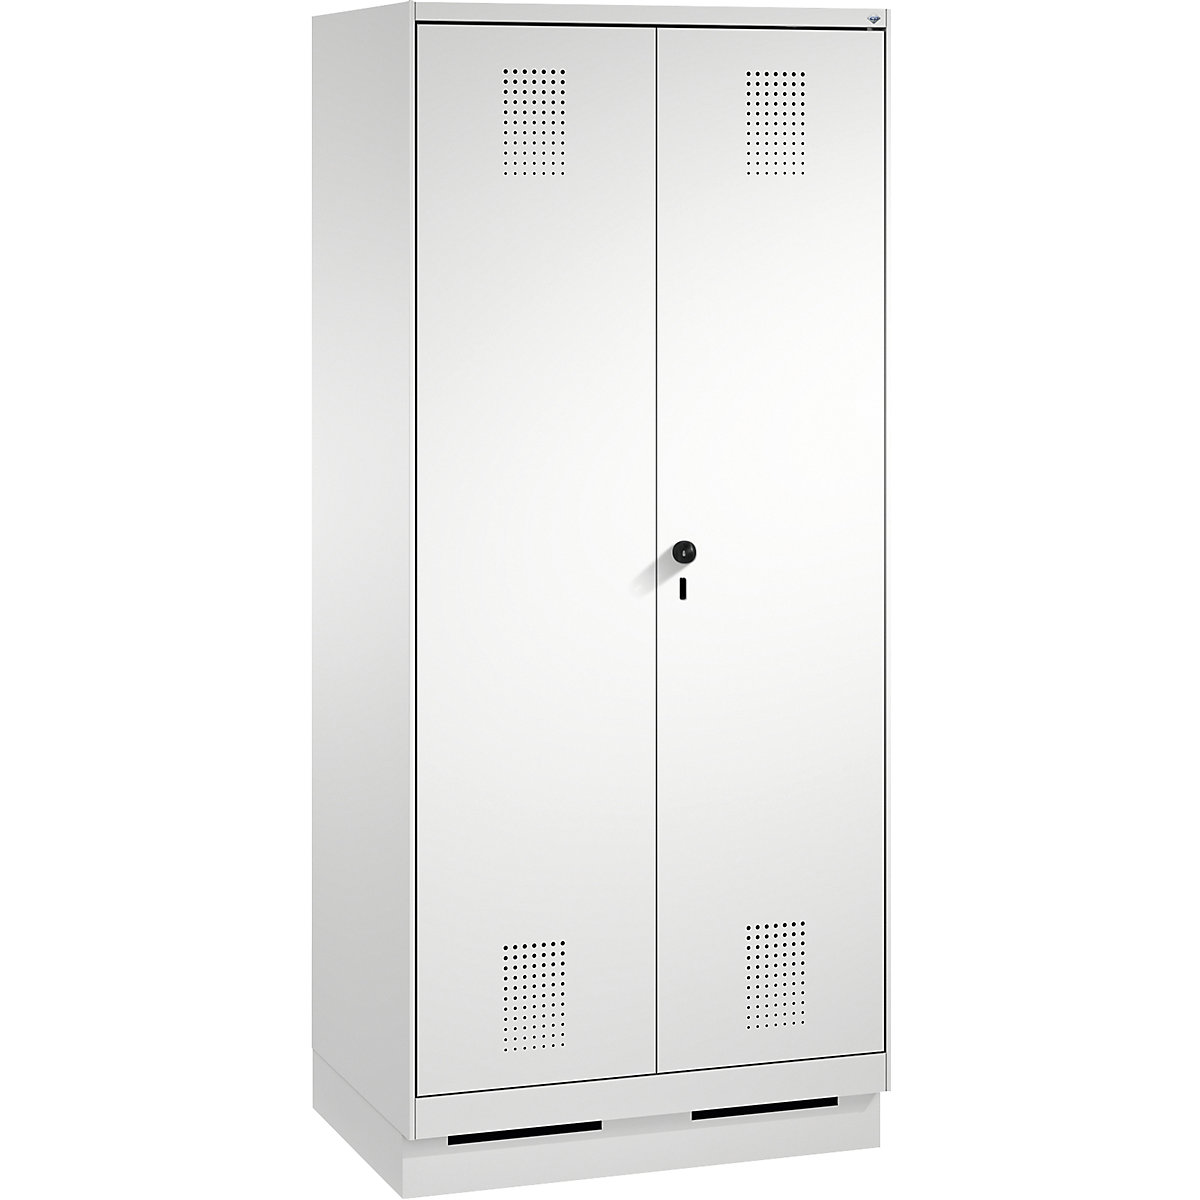 Garderobna omara EVOLO, dvokrilna vrata – C+P, 2 razdelka, širina razdelka 400 mm, s podnožjem, svetlo siva-4